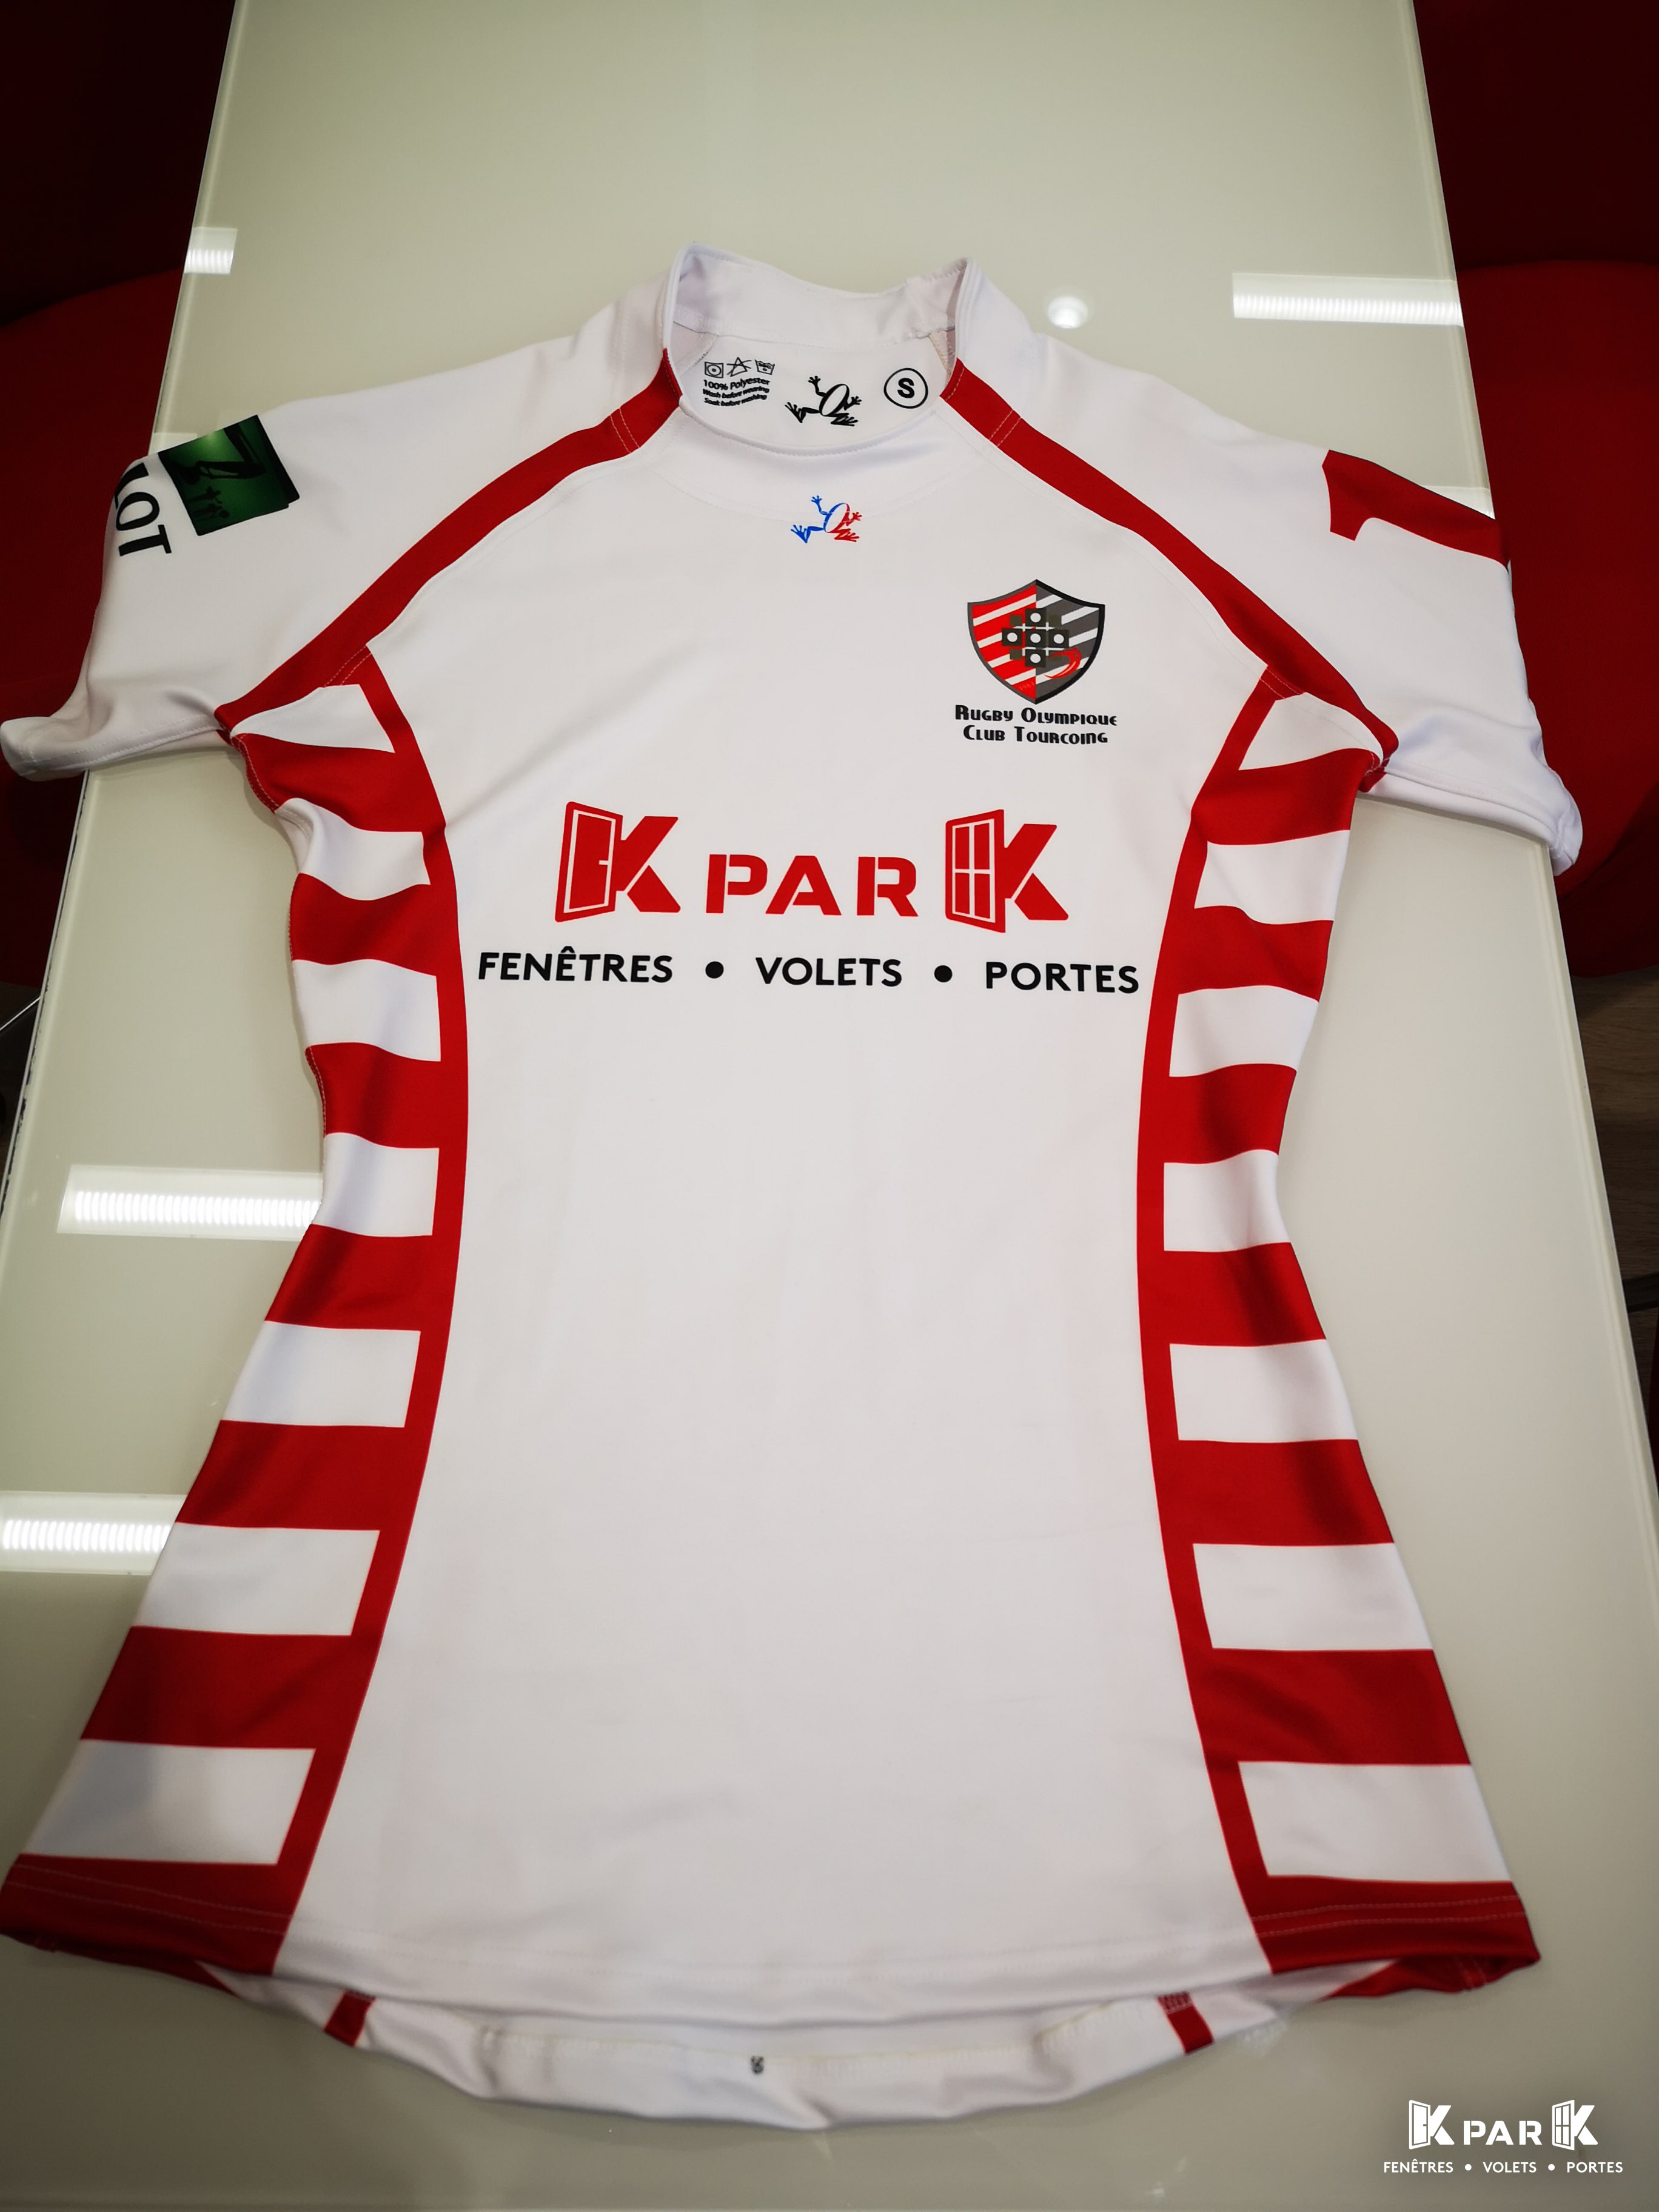 maillot kpark pour le rugby club de tourcoing